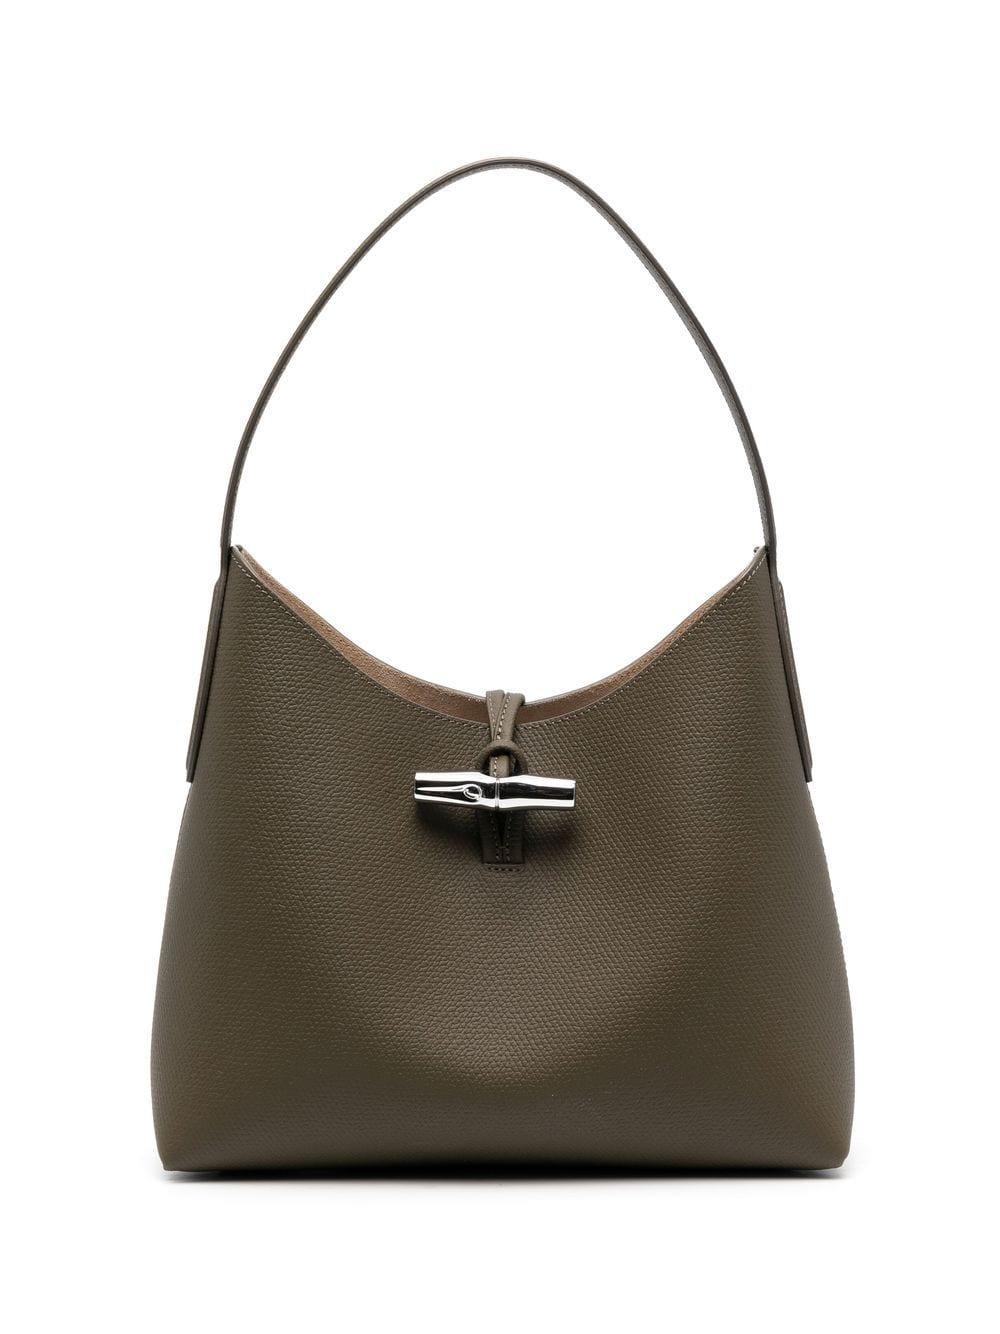 Longchamp Roseau Leather Shoulder Bag in Green | Lyst